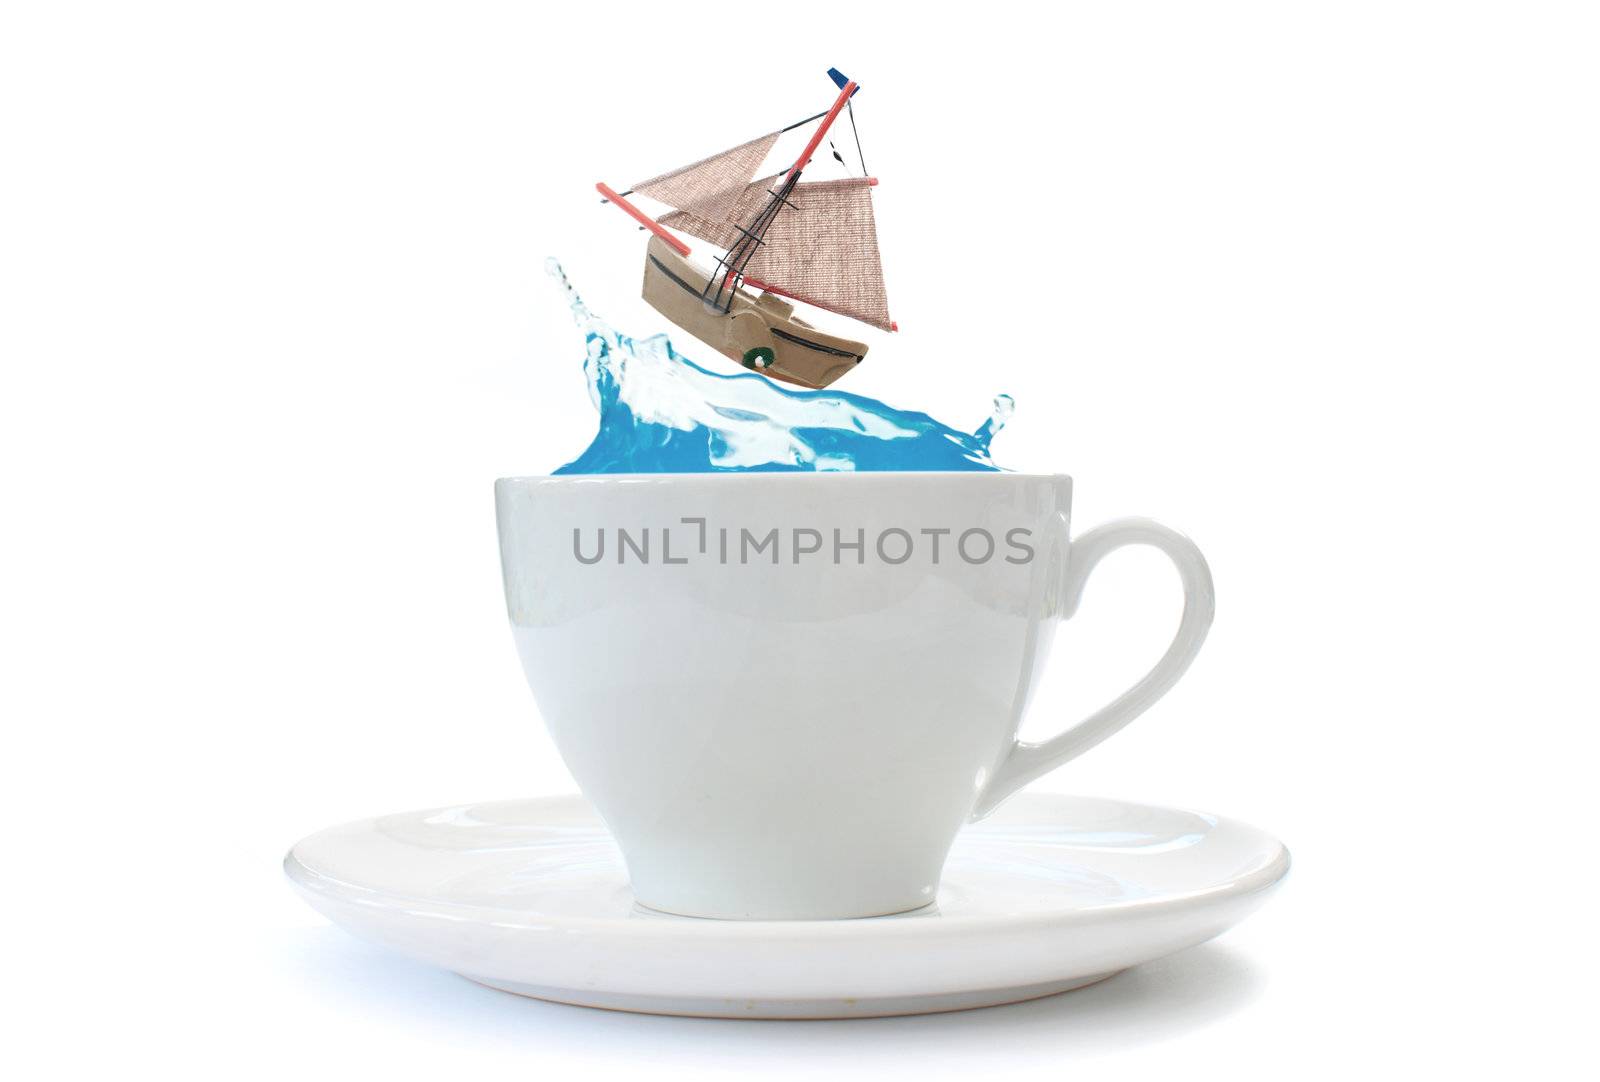 Sailing boat crashing against a wave inside a teacup